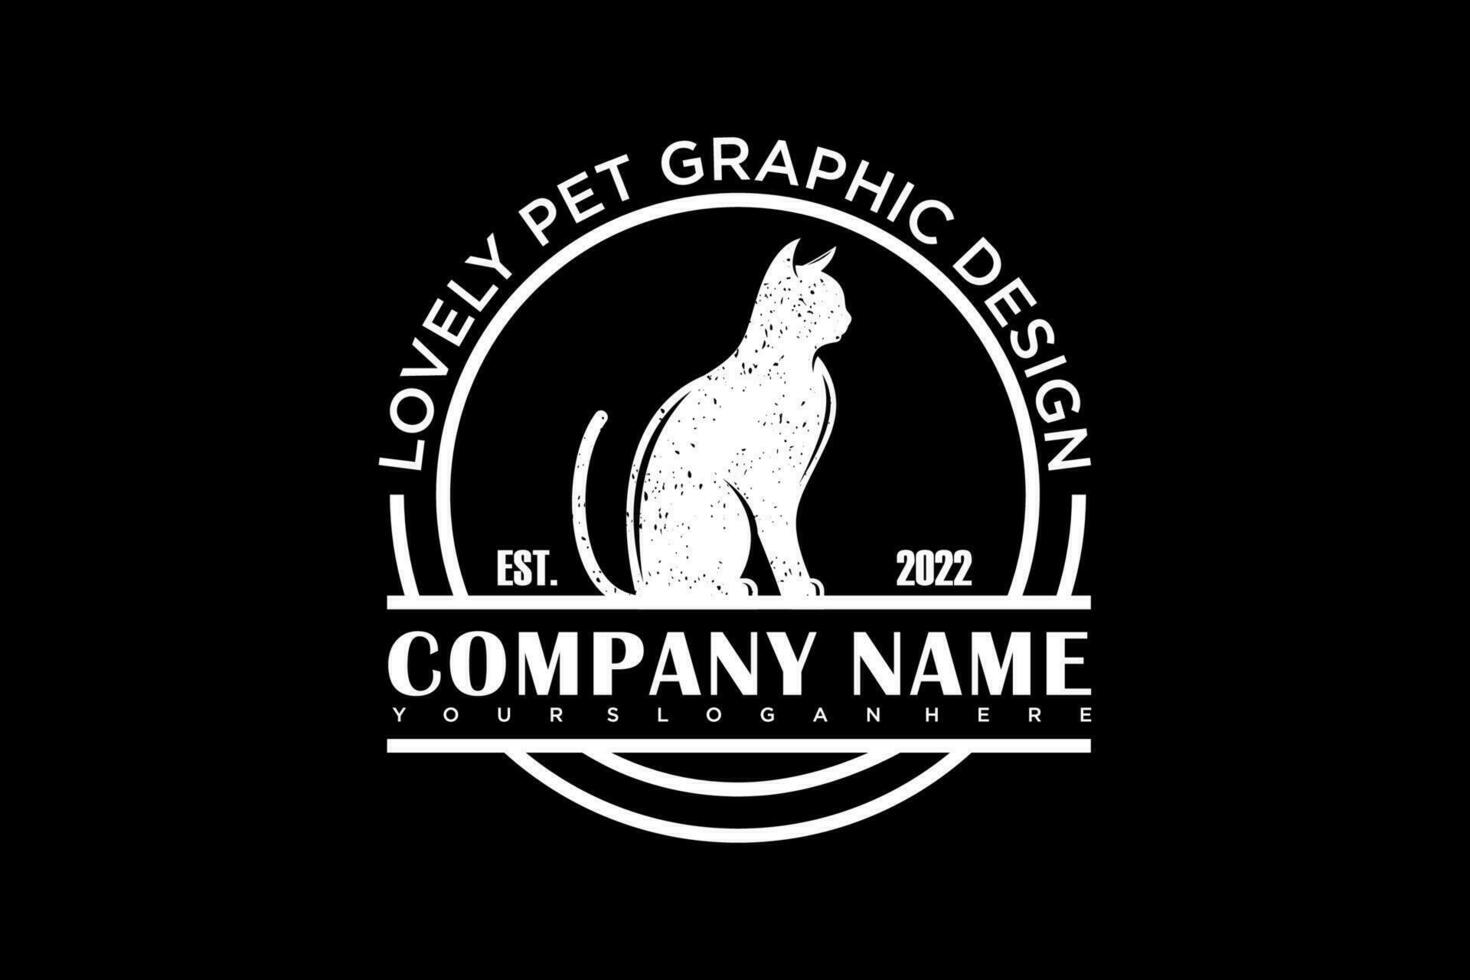 gato logo.cat logotipo mascota tienda logo concepto. mascota cuidado logo concepto. mascota vector ilustración